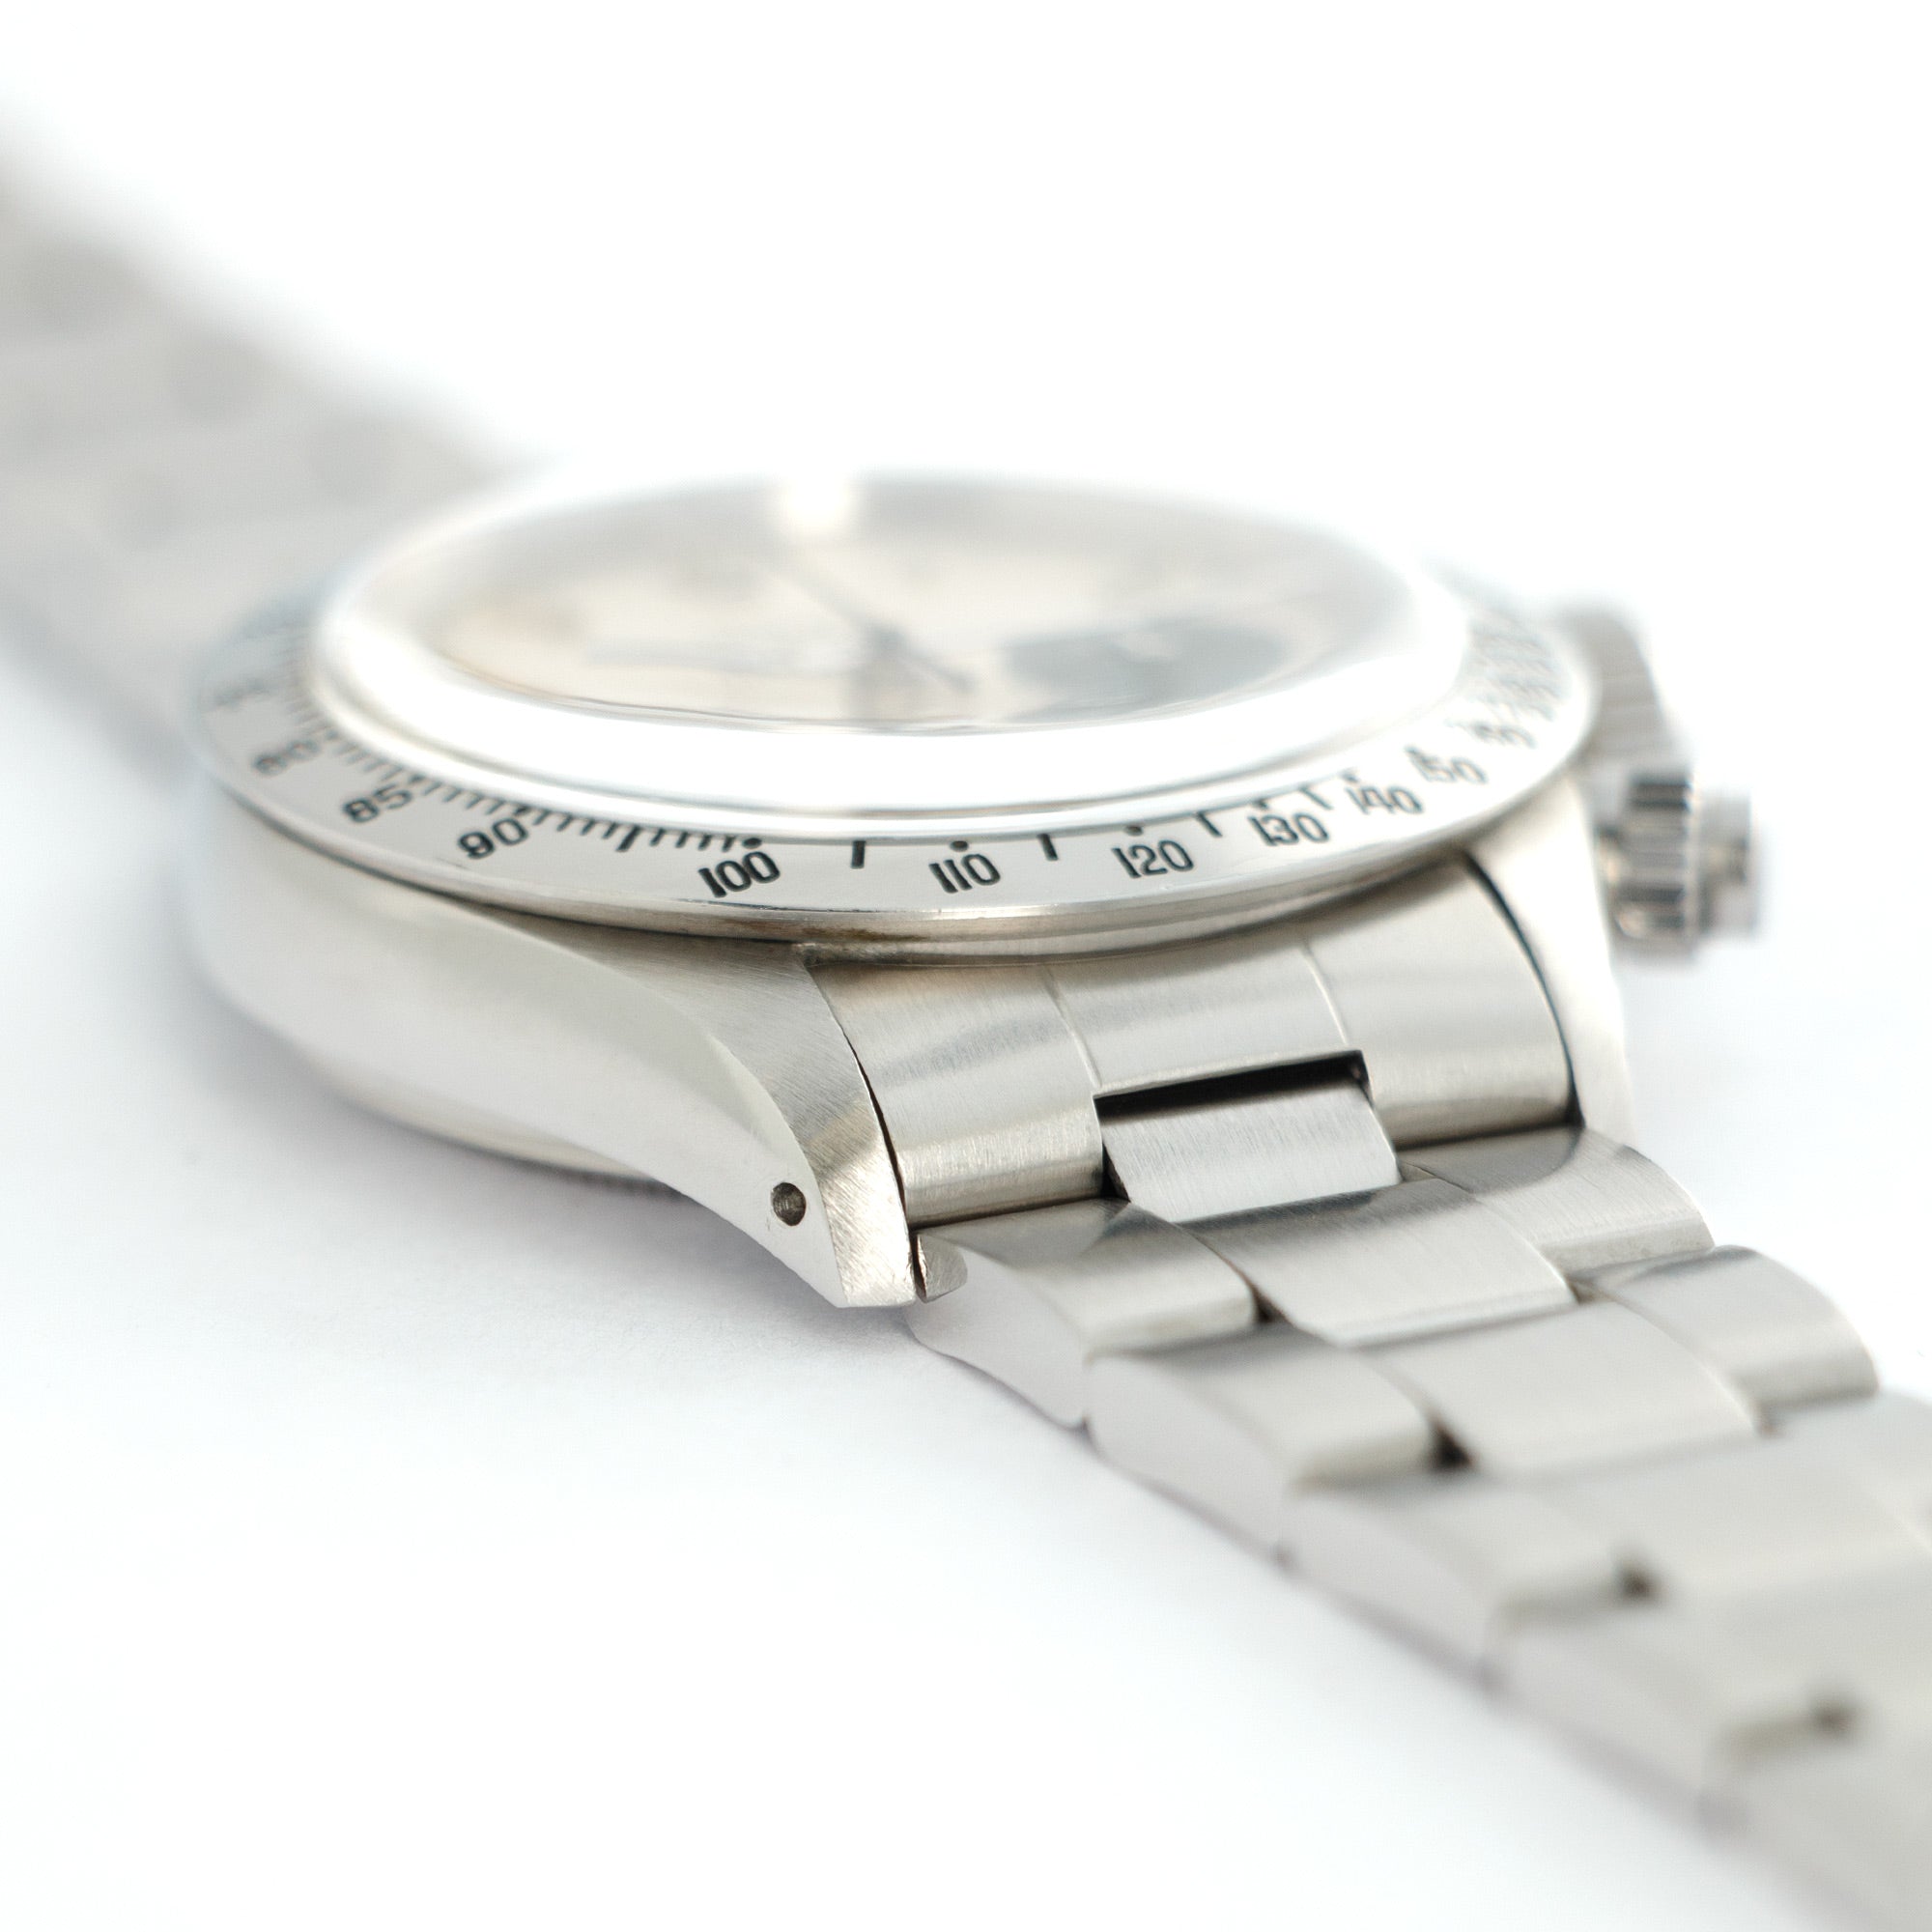 Rolex - Rolex Cosmograph Daytona Big Red Watch Ref. 6265, Retailed by Tiffany & Co. - The Keystone Watches